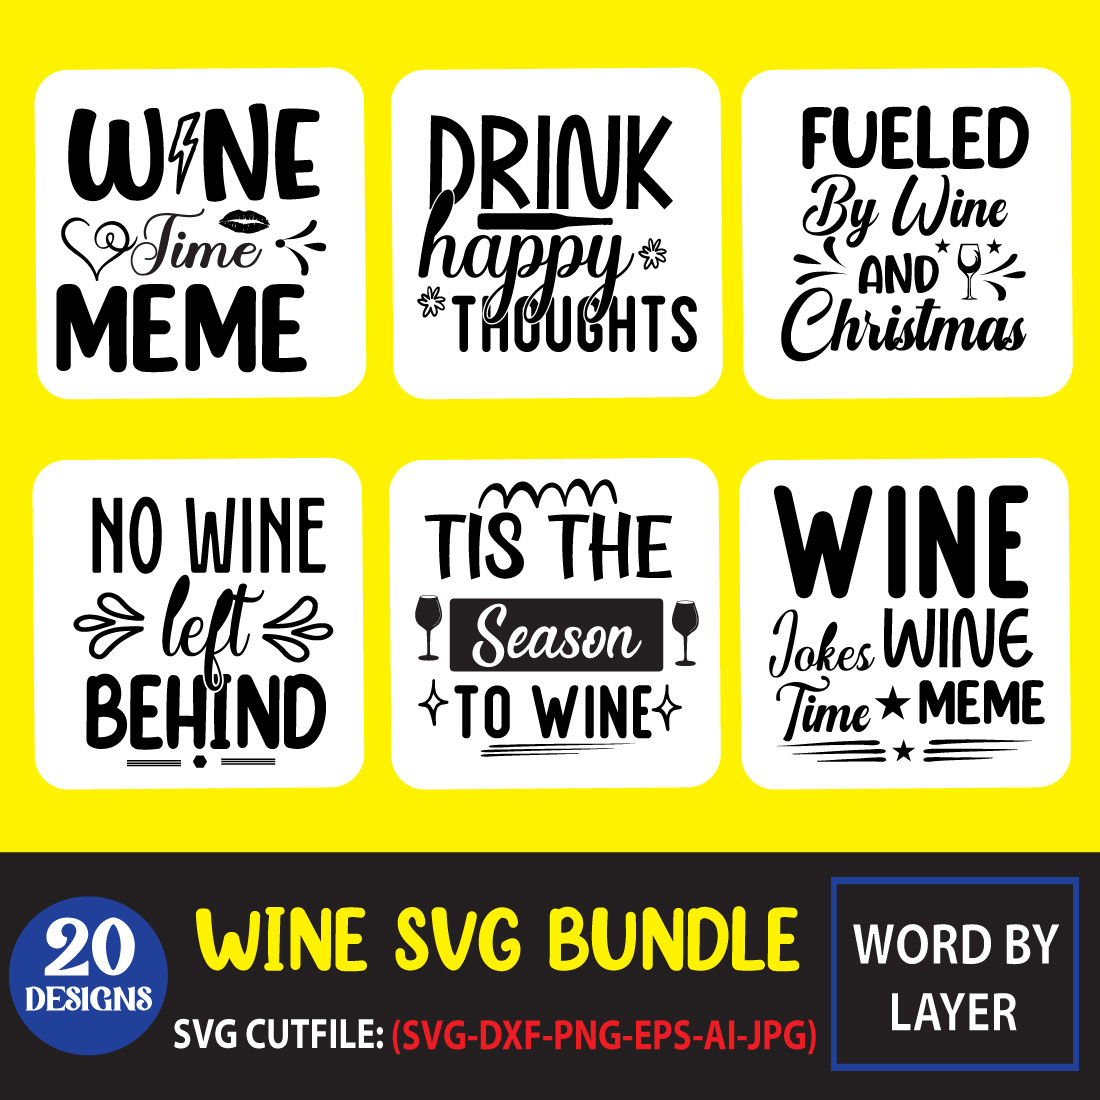 Wine SVG Bundle main cover.